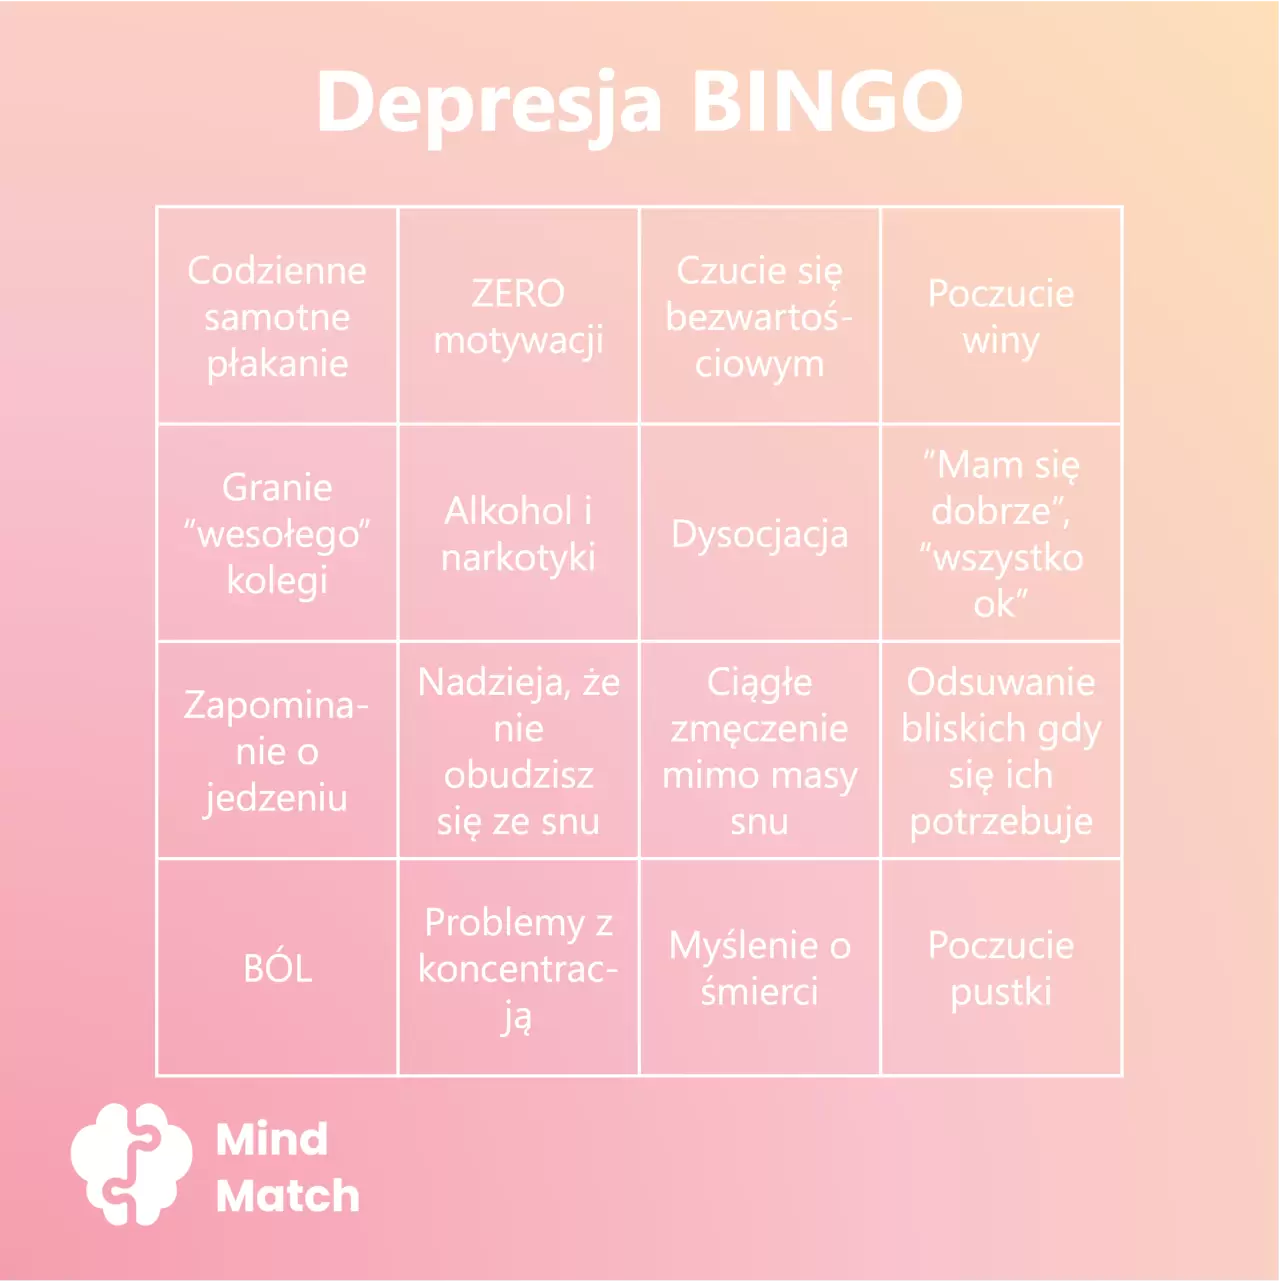 Depresja memy Depresja bingo